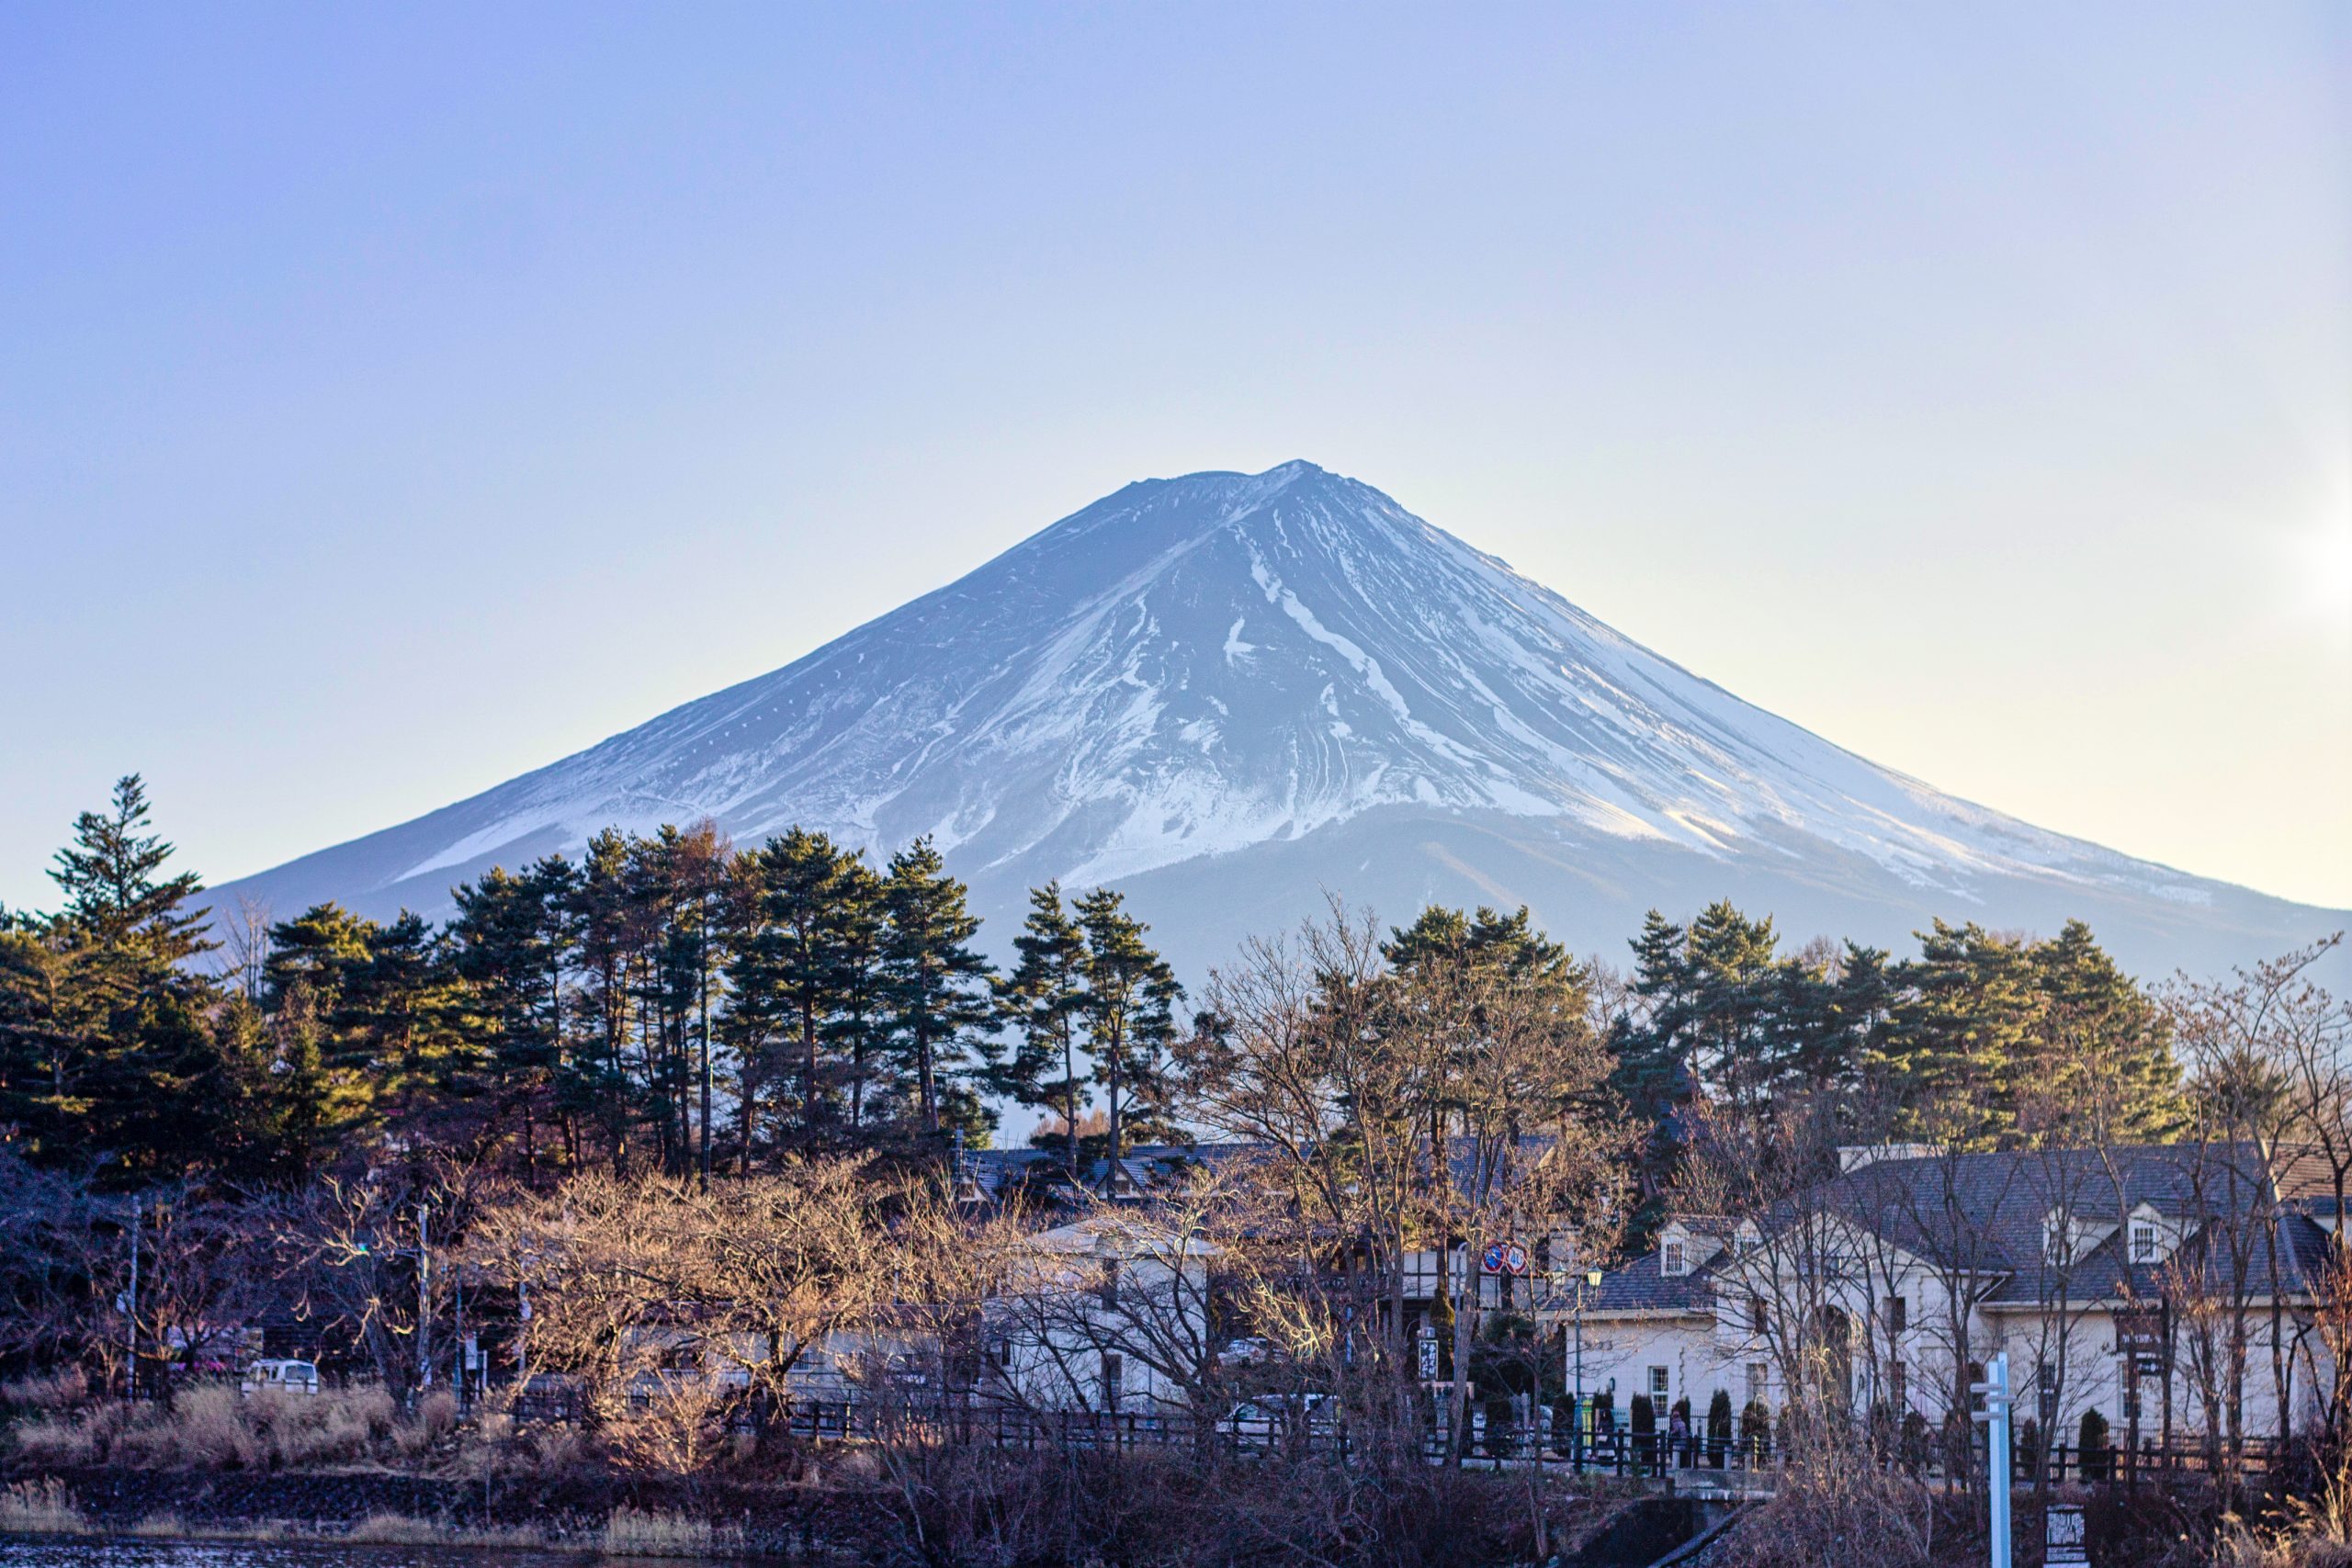 The famous Mt. Fuji of Japan.